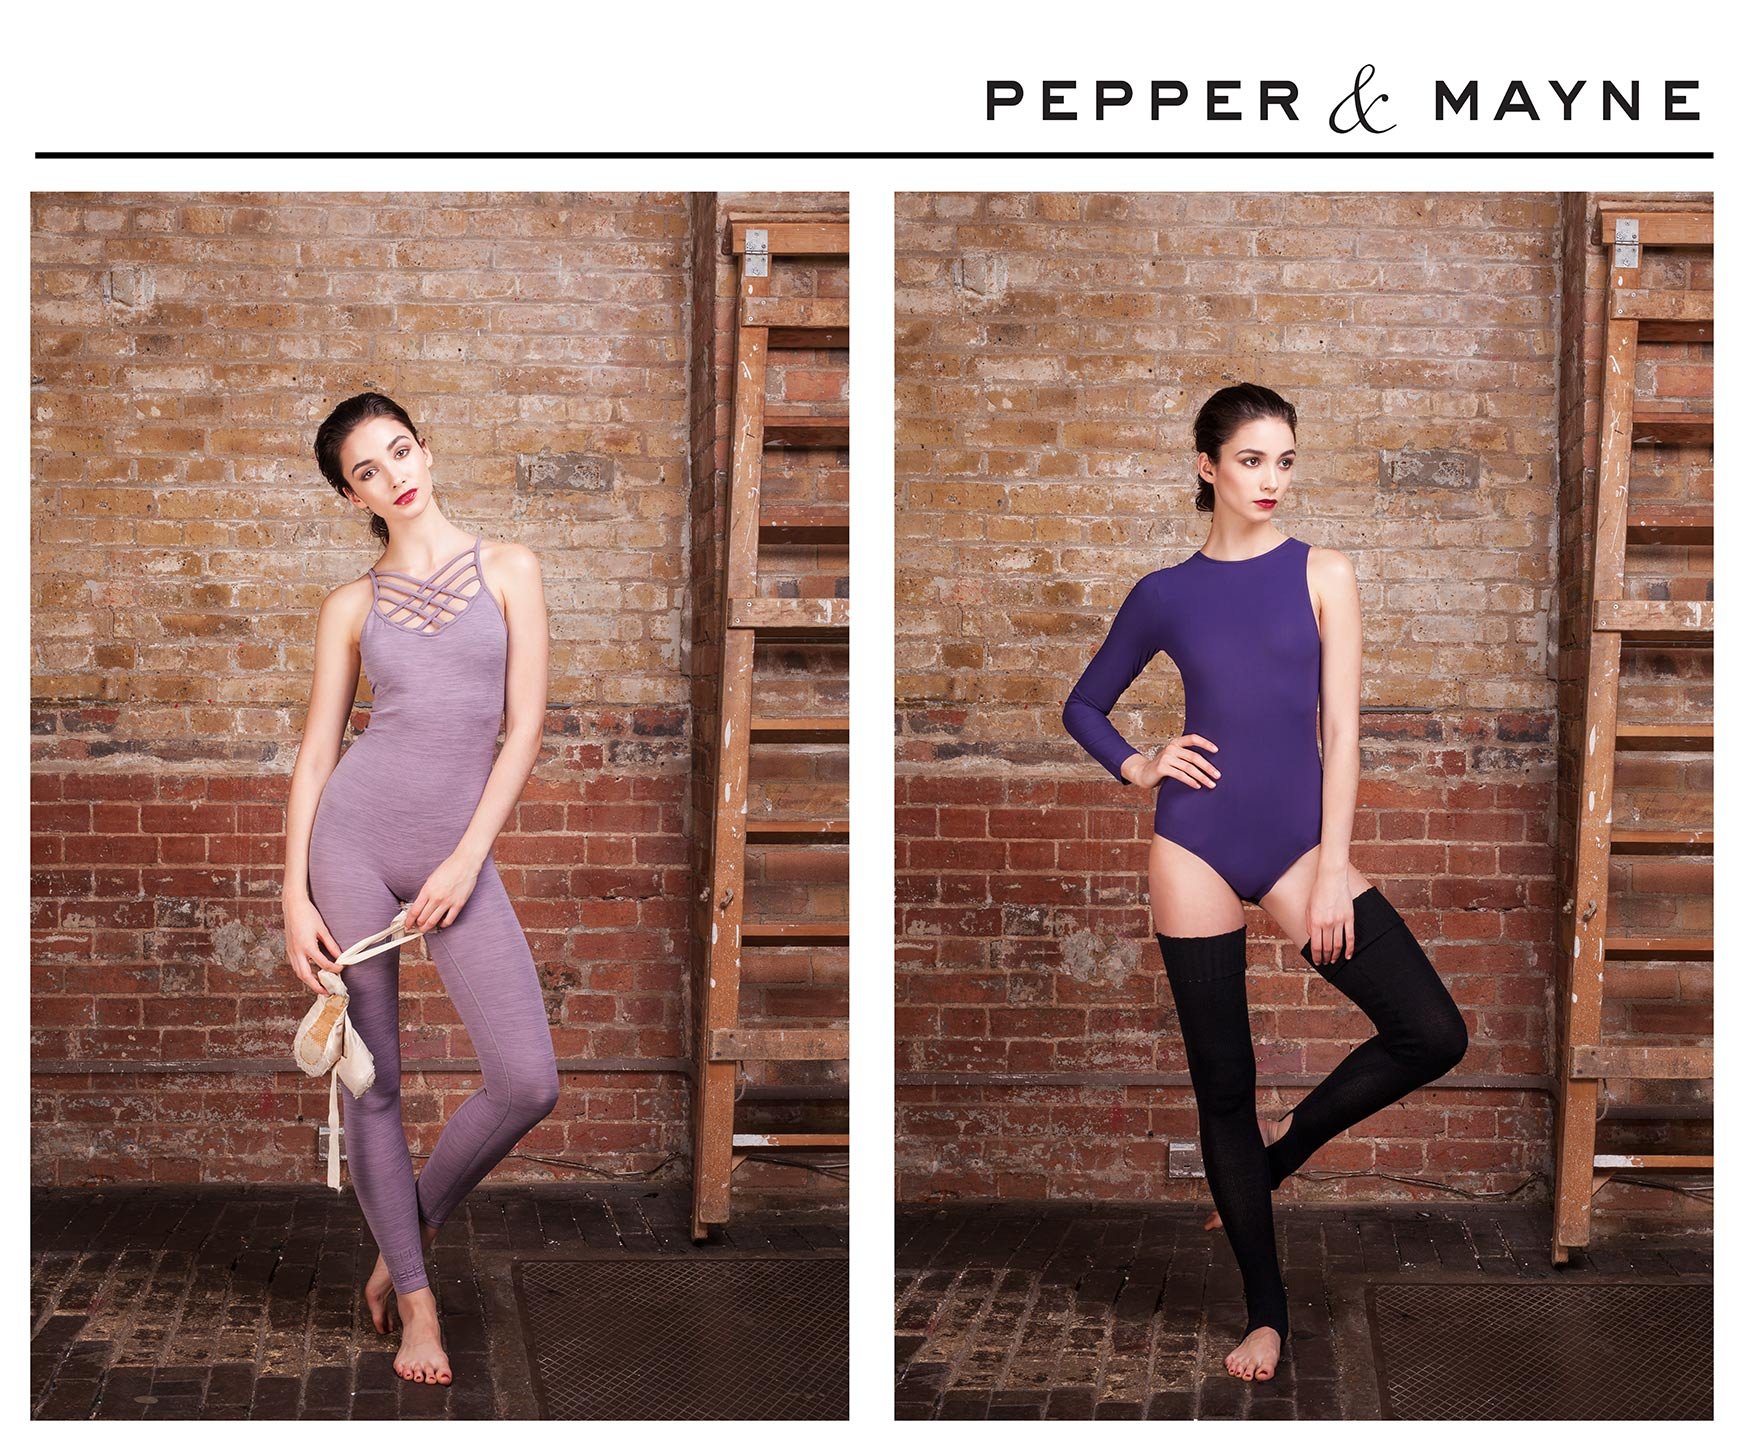 Pepper&Mayne_GabiTorres_Set4web-2.jpg